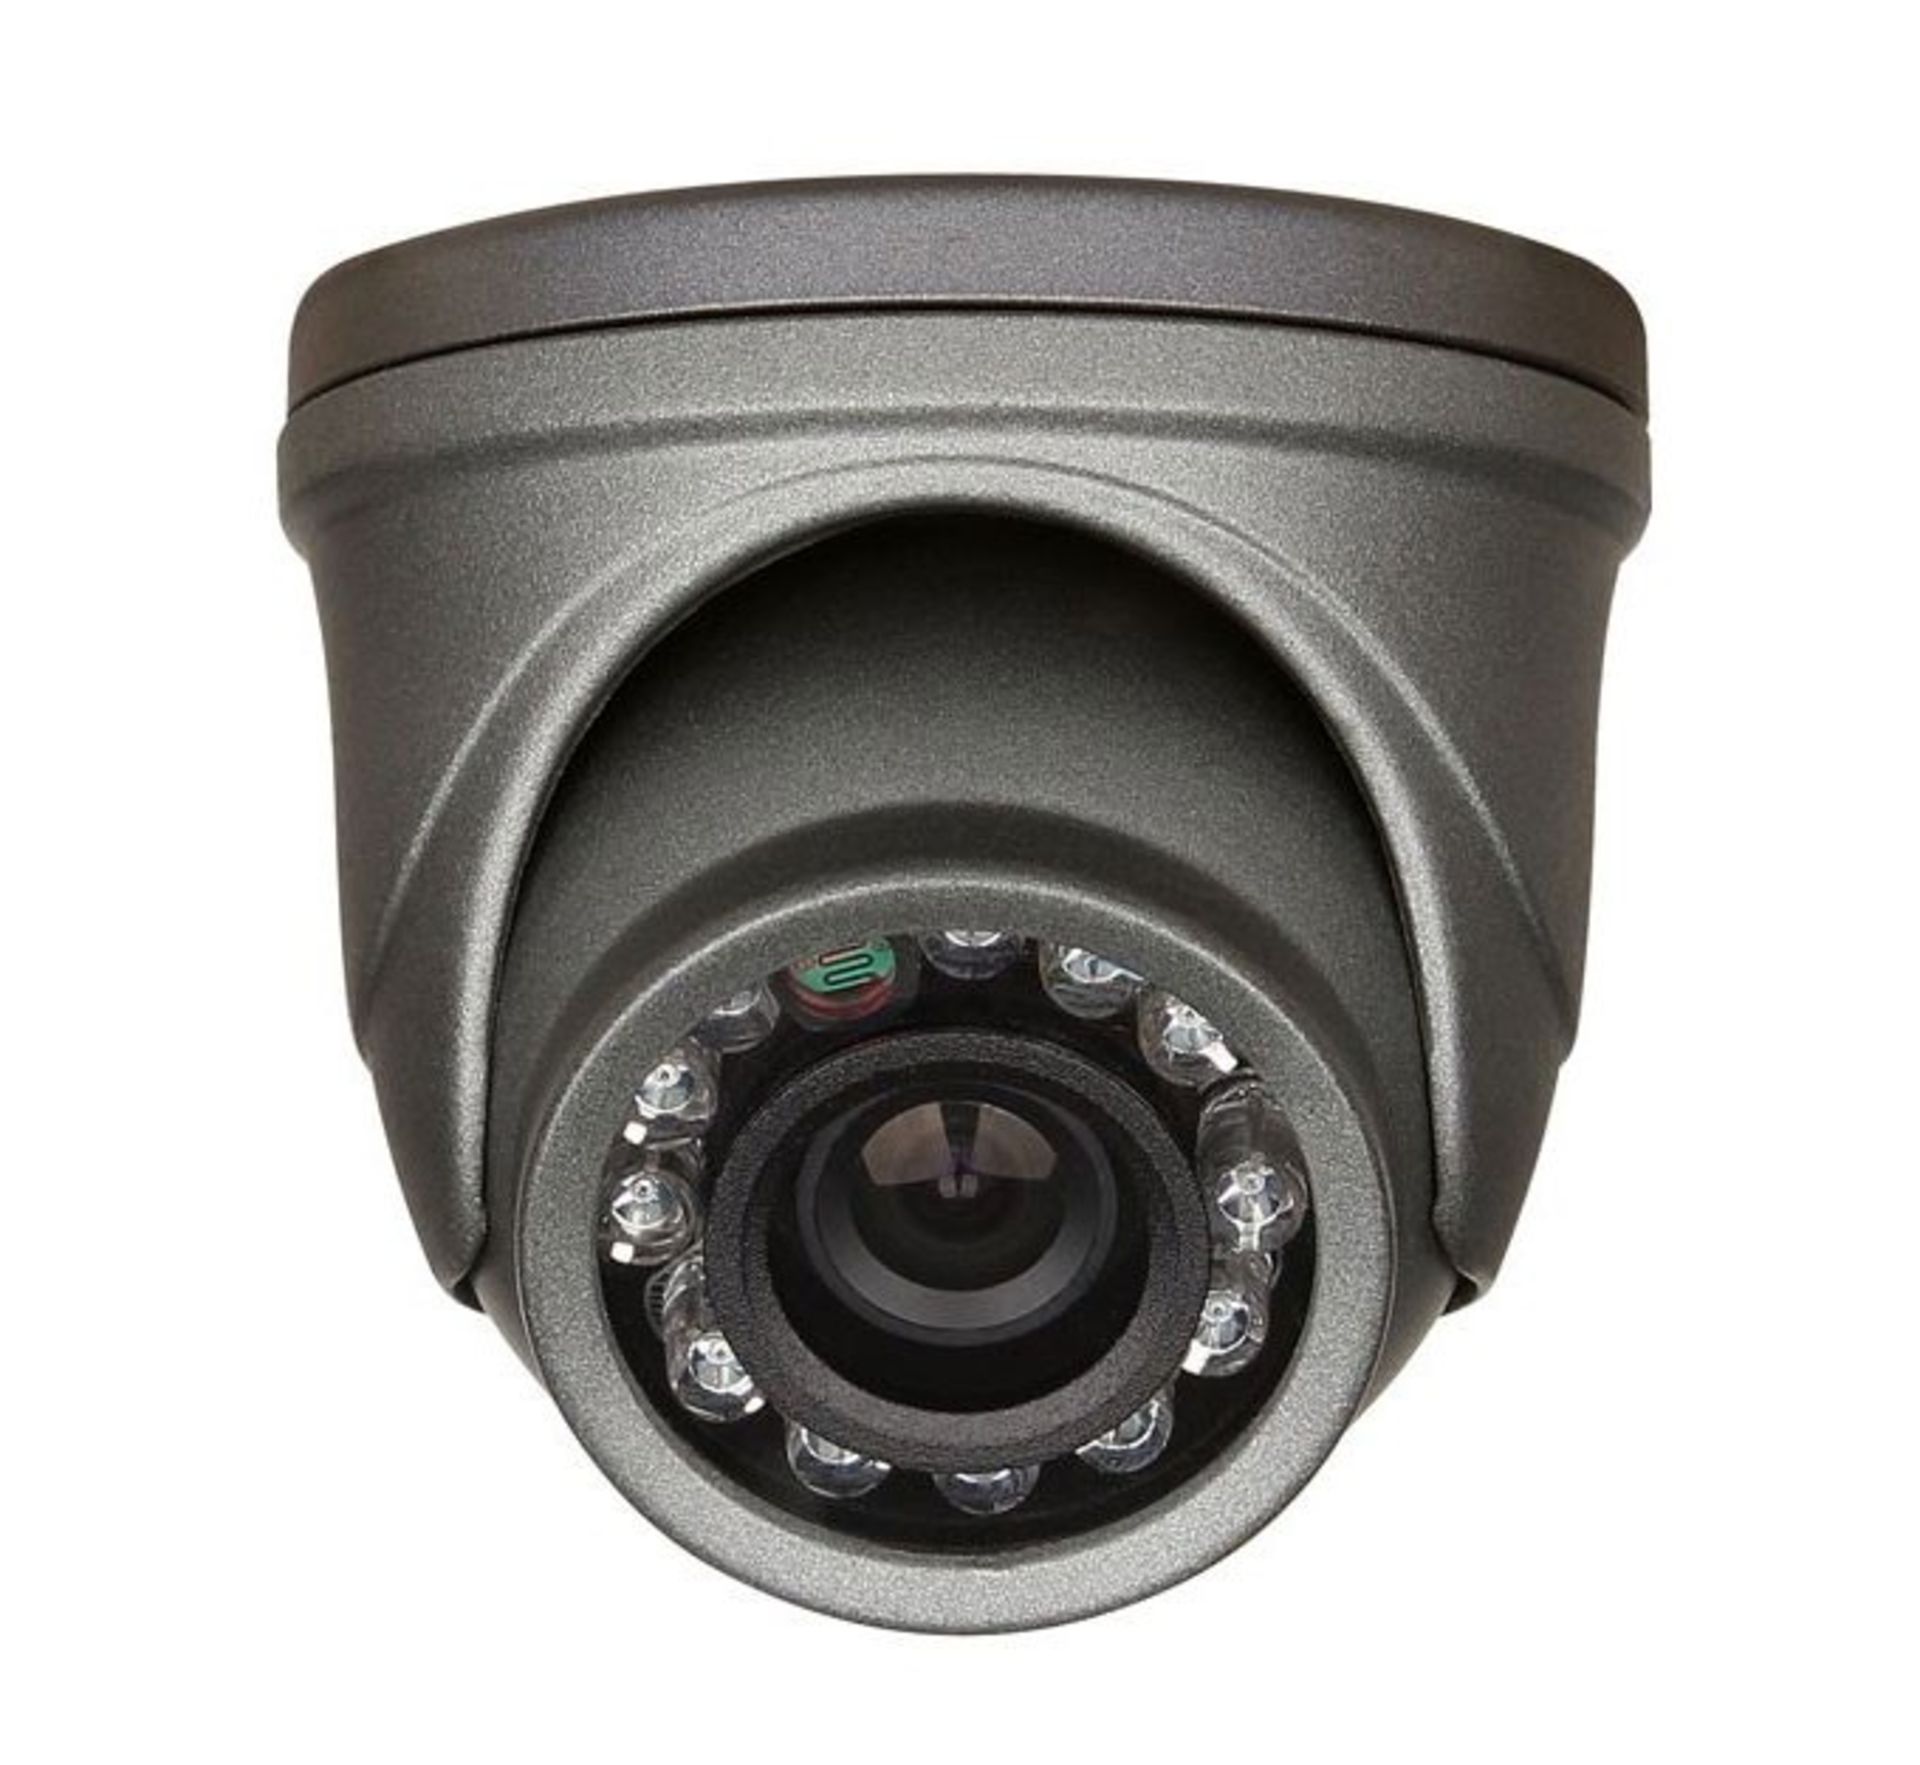 V Brand New Avtech IR Vandalproof Dome Camera - 1/3" Sony Colour480TVL Lense - Online Price £62.